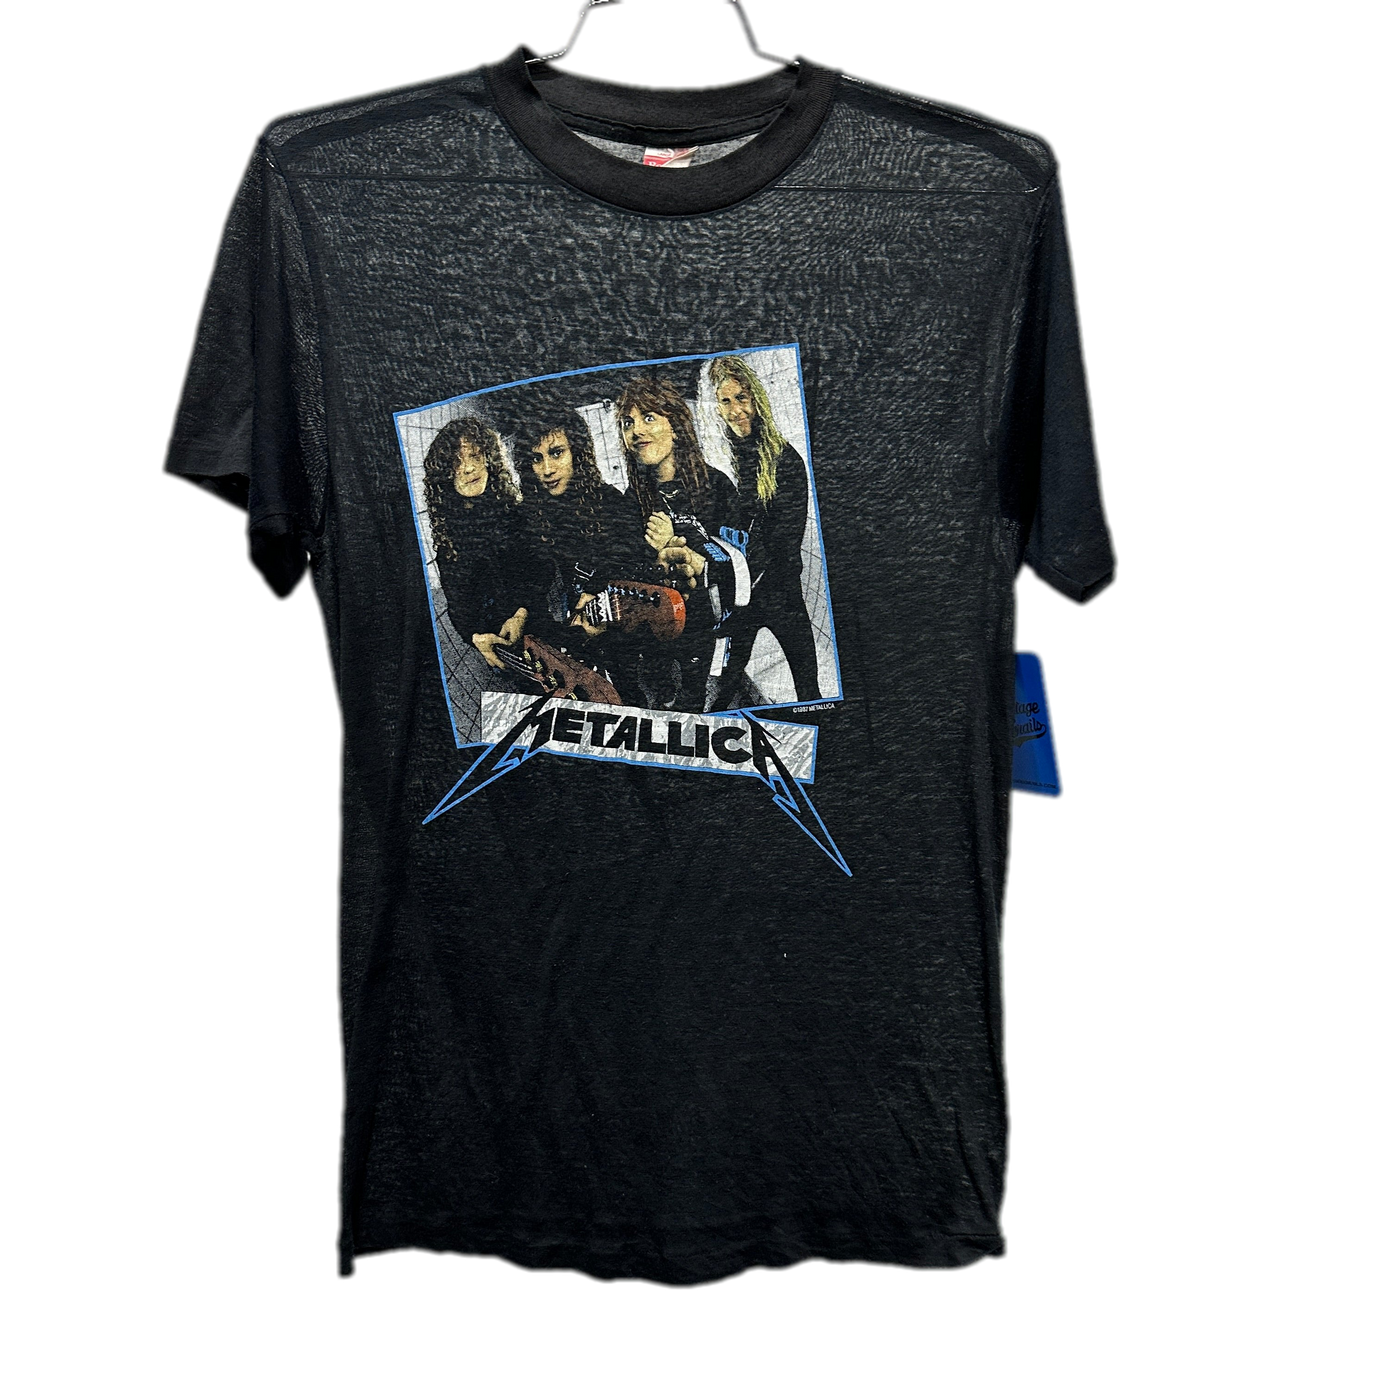 '87 Metallica Black Music T-Shirt sz L